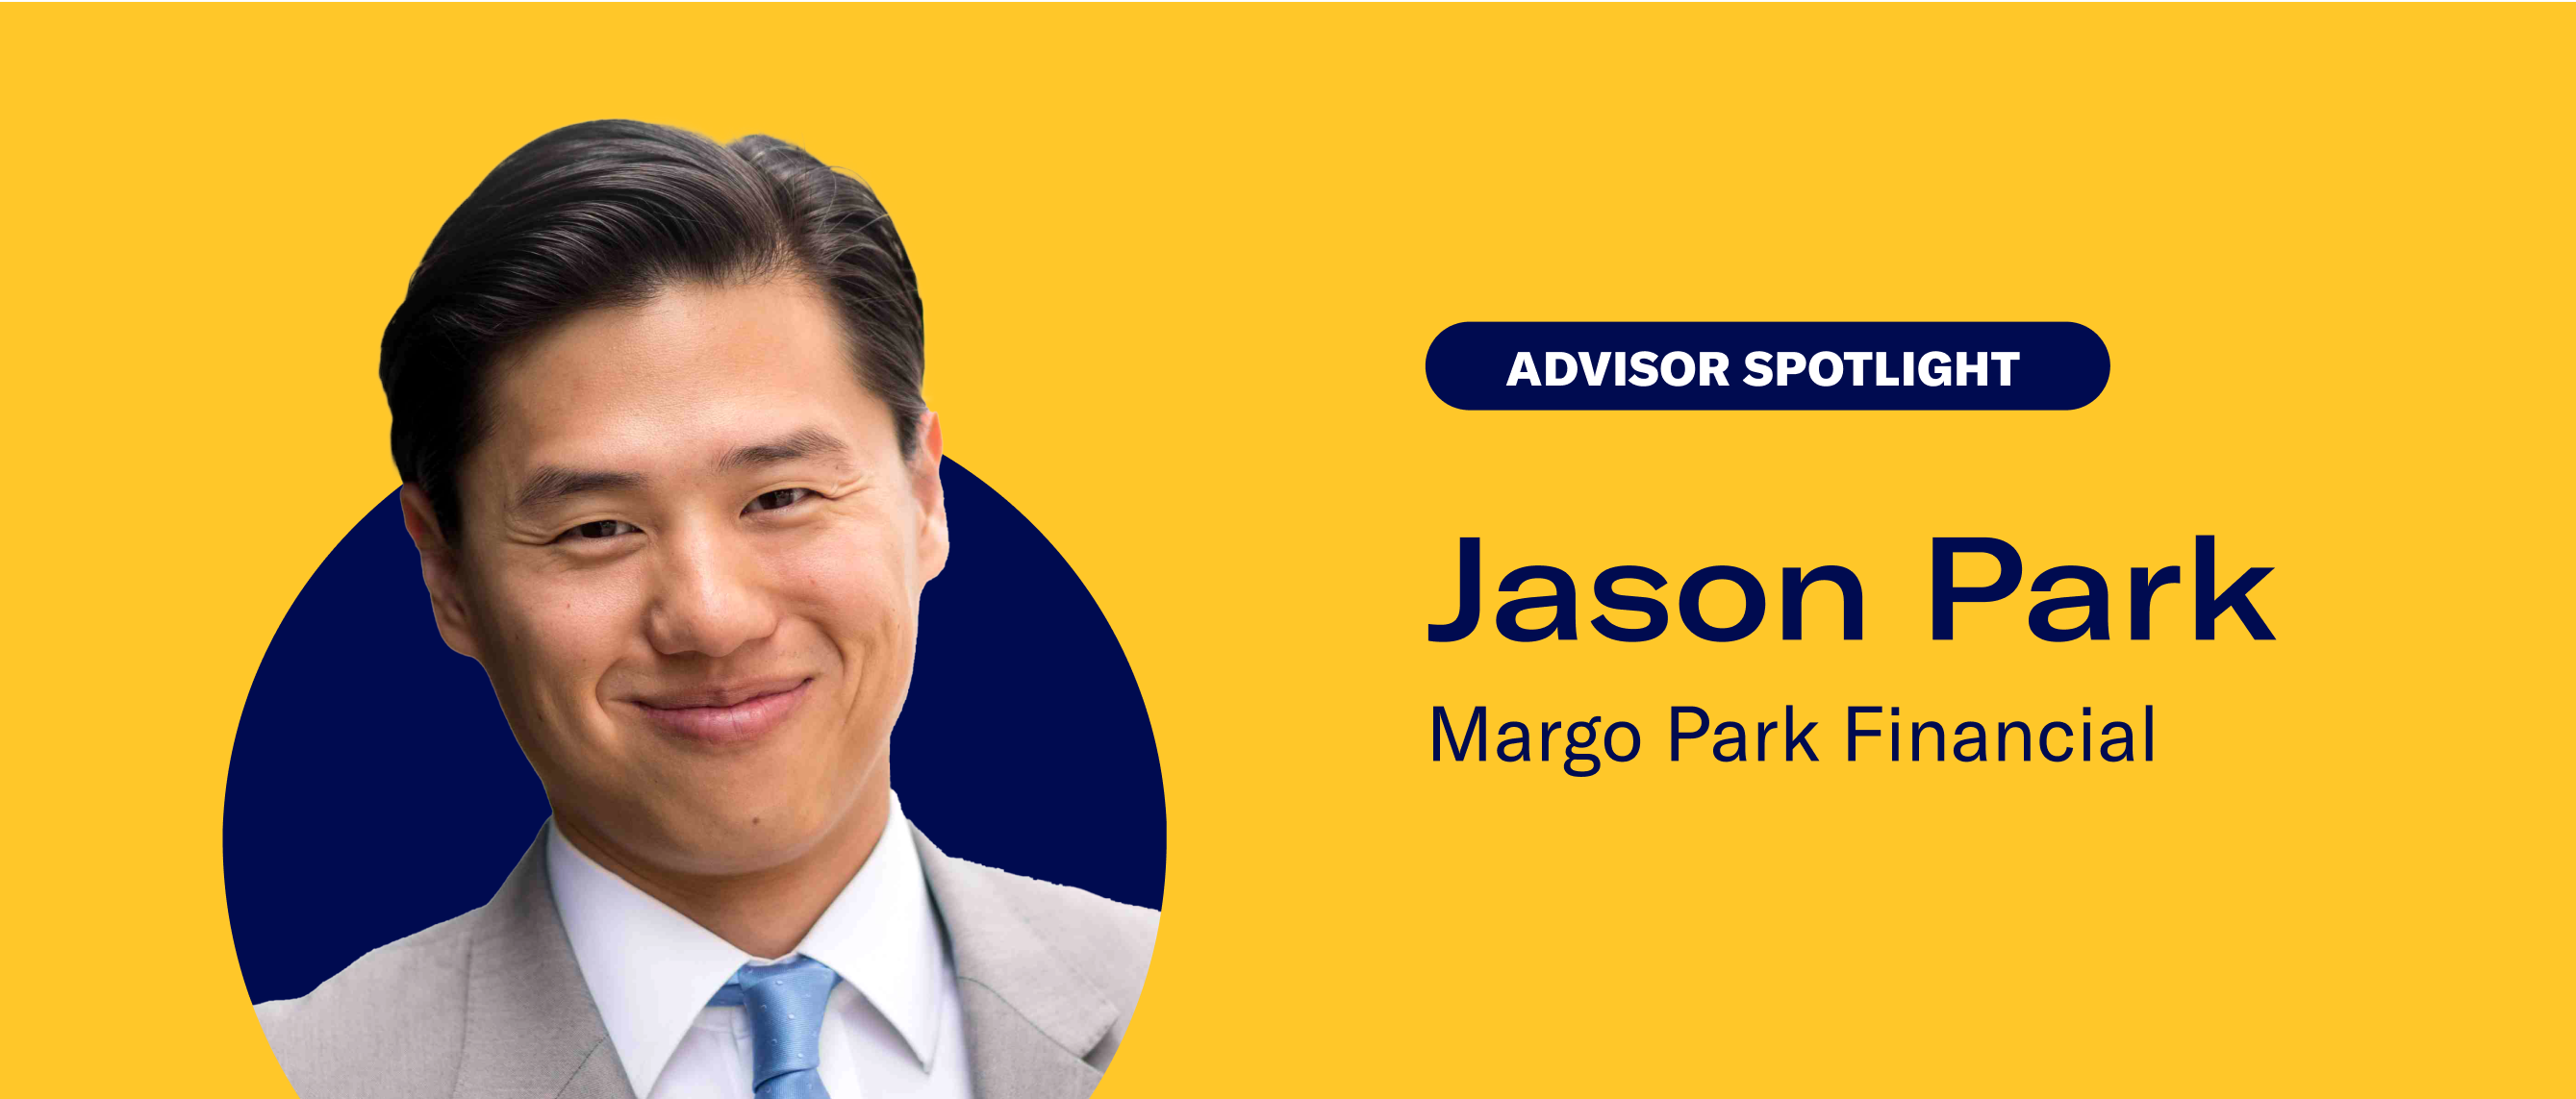 Advisor Spotlight: Jason Park, Margo Park Financial